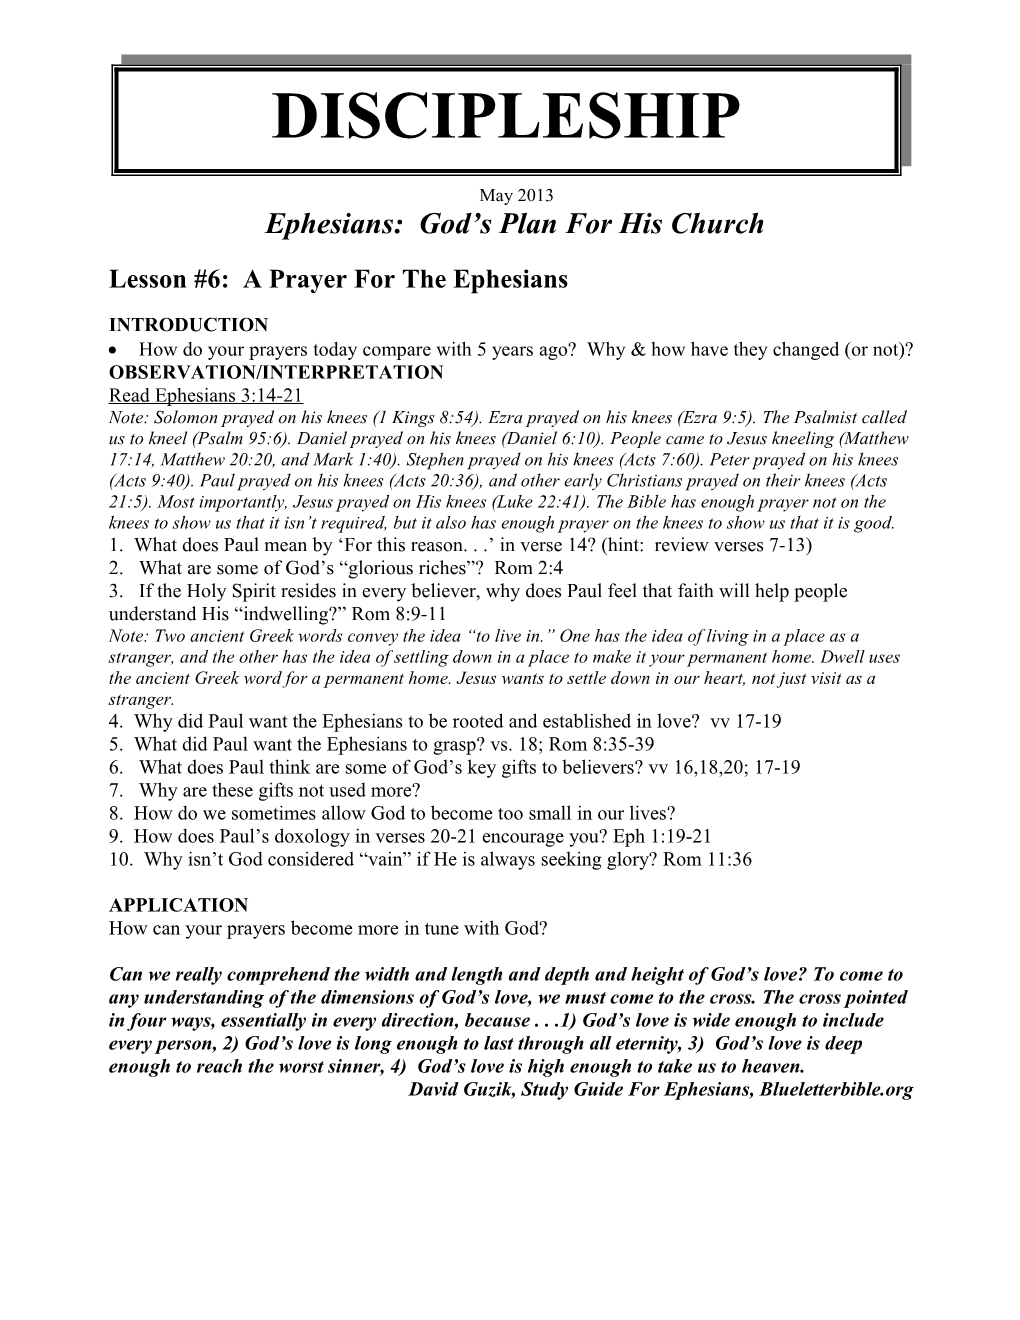 Ephesians: God S Plan for His Church